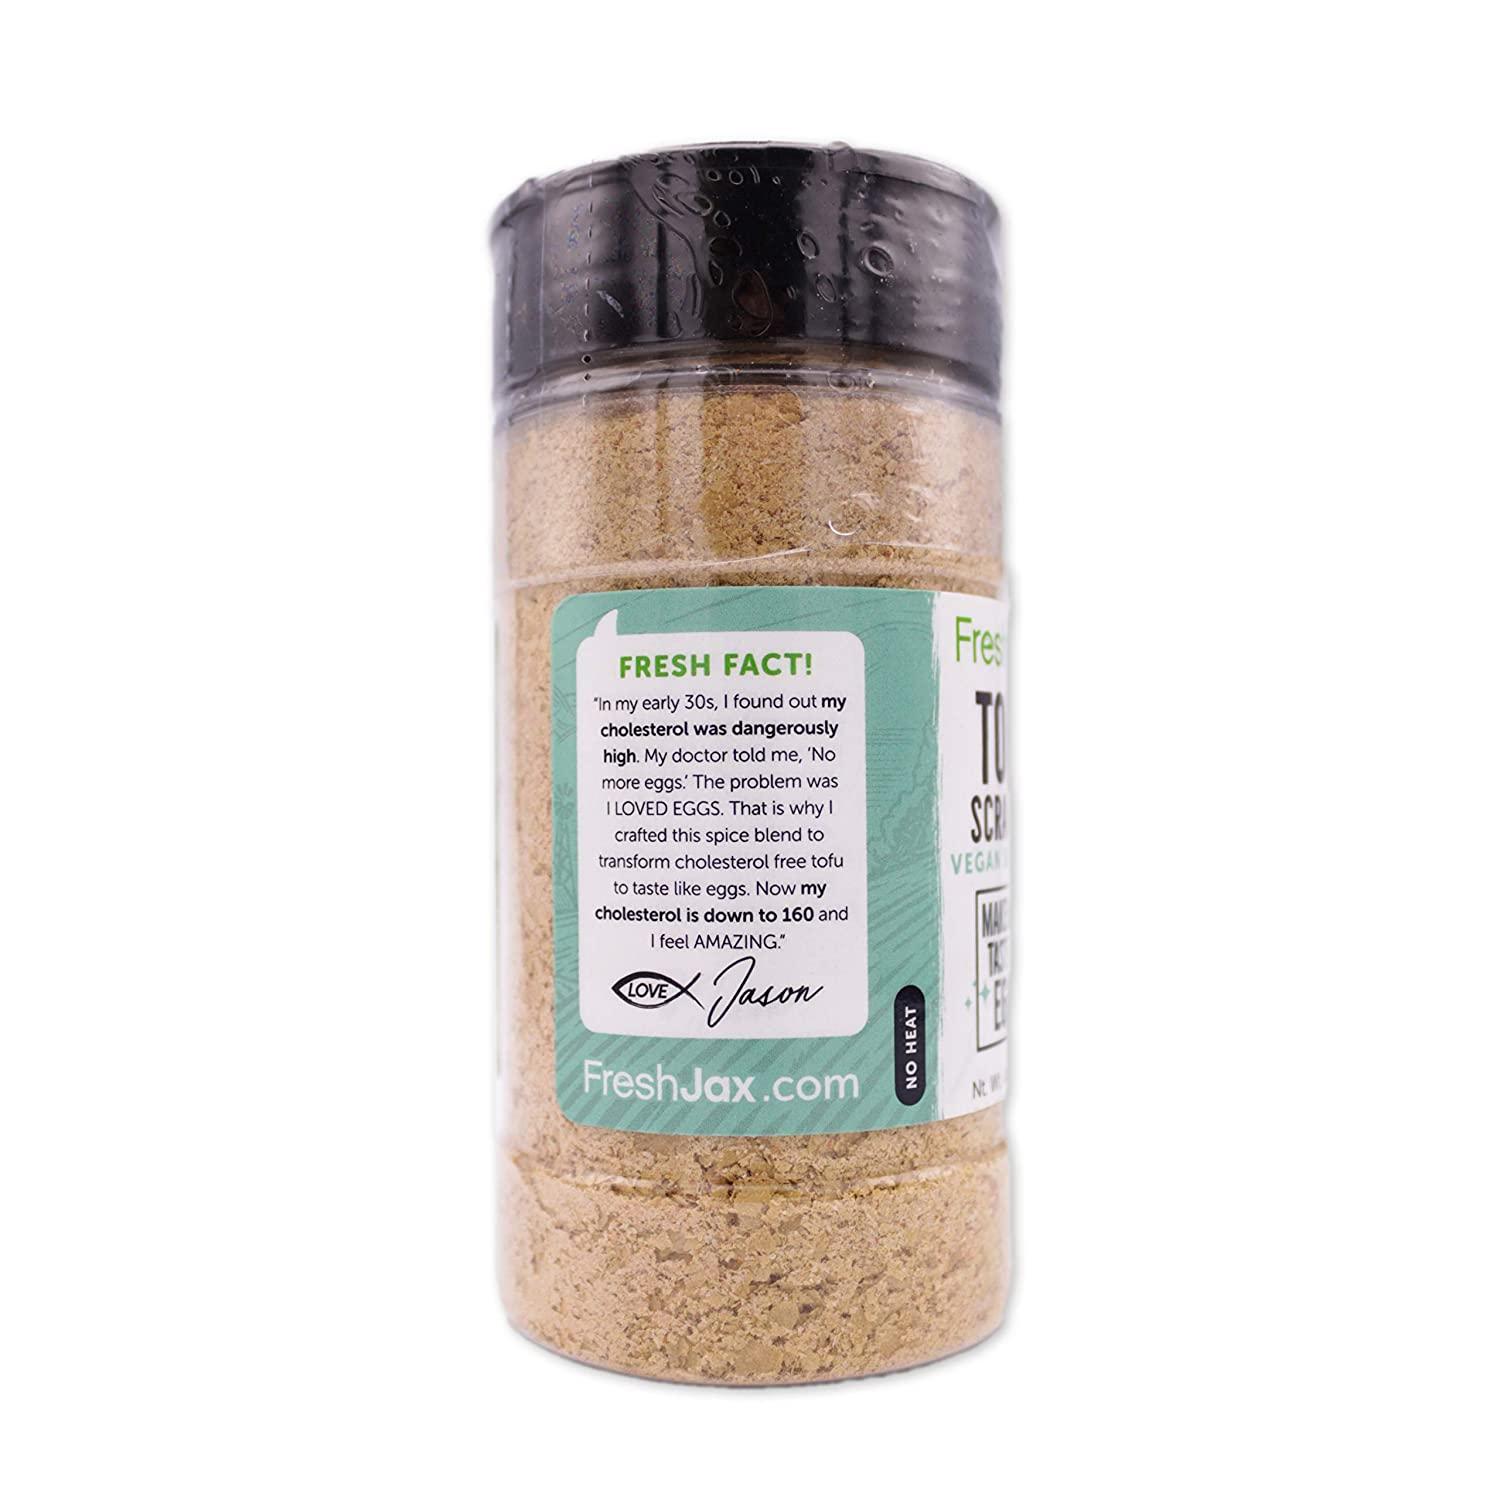 Freshjax 25 Premium Spices Organic Variety Pack